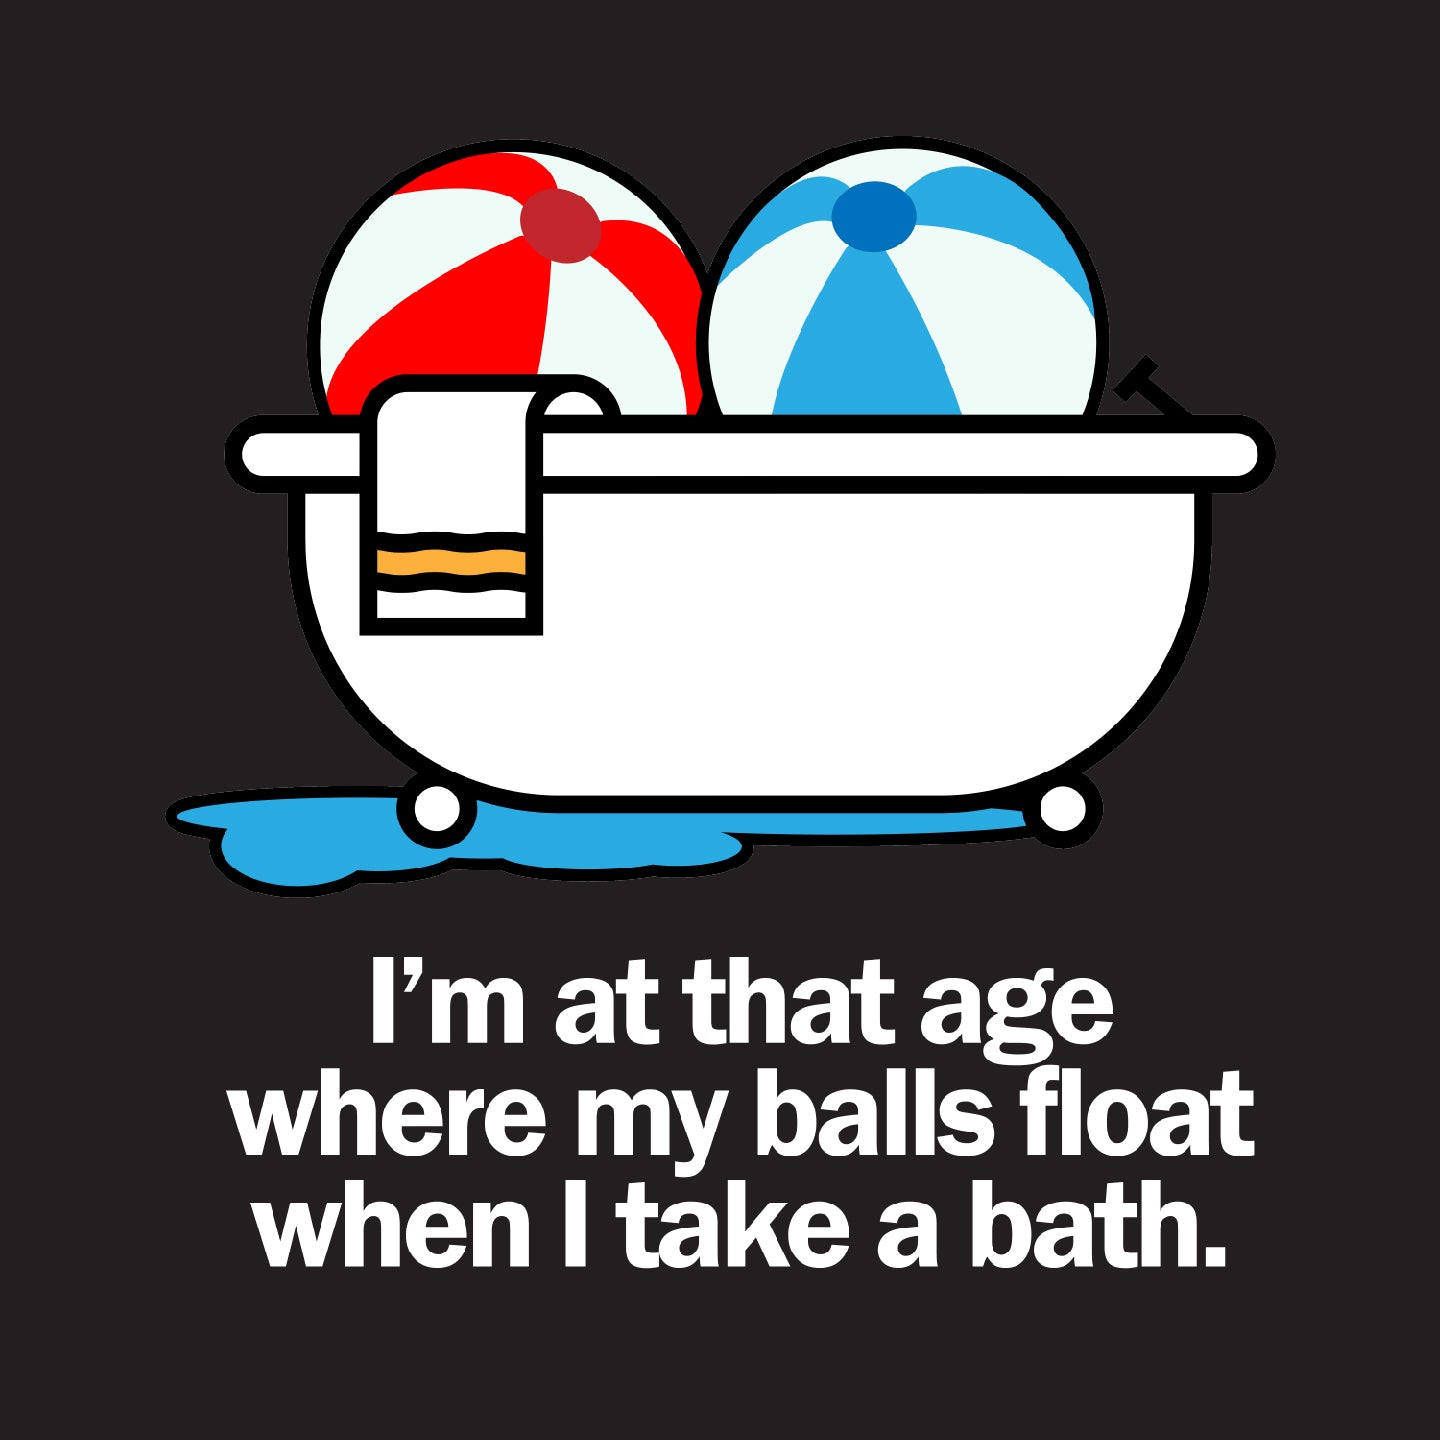 I'm at that age where my balls float when I take a bath